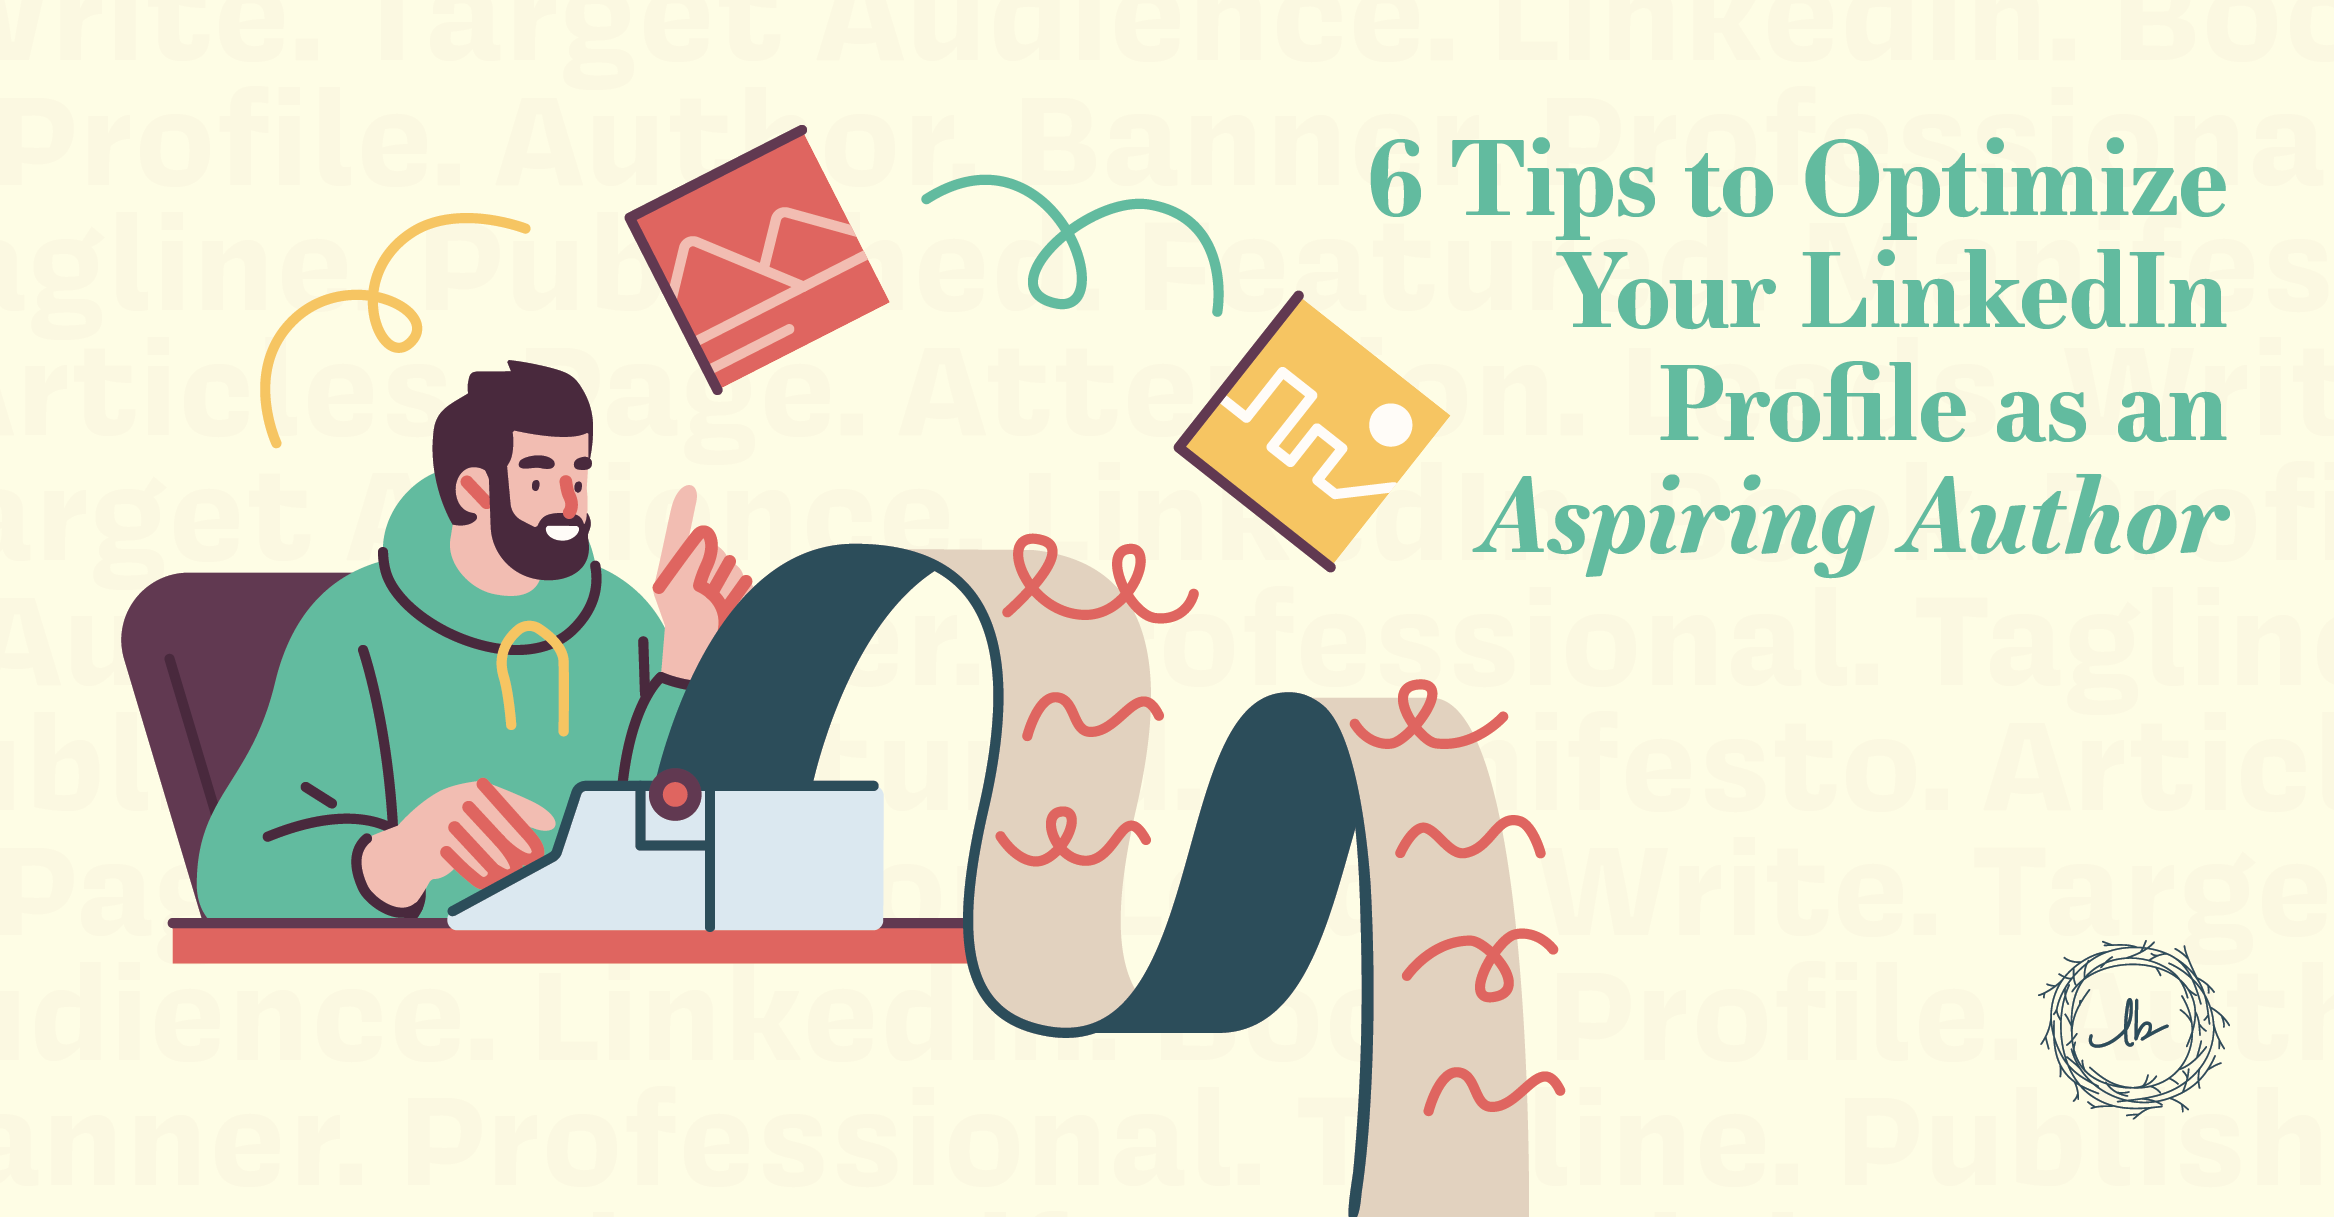 6 Tips to Optimize Your LinkedIn Profile as an Aspiring Author